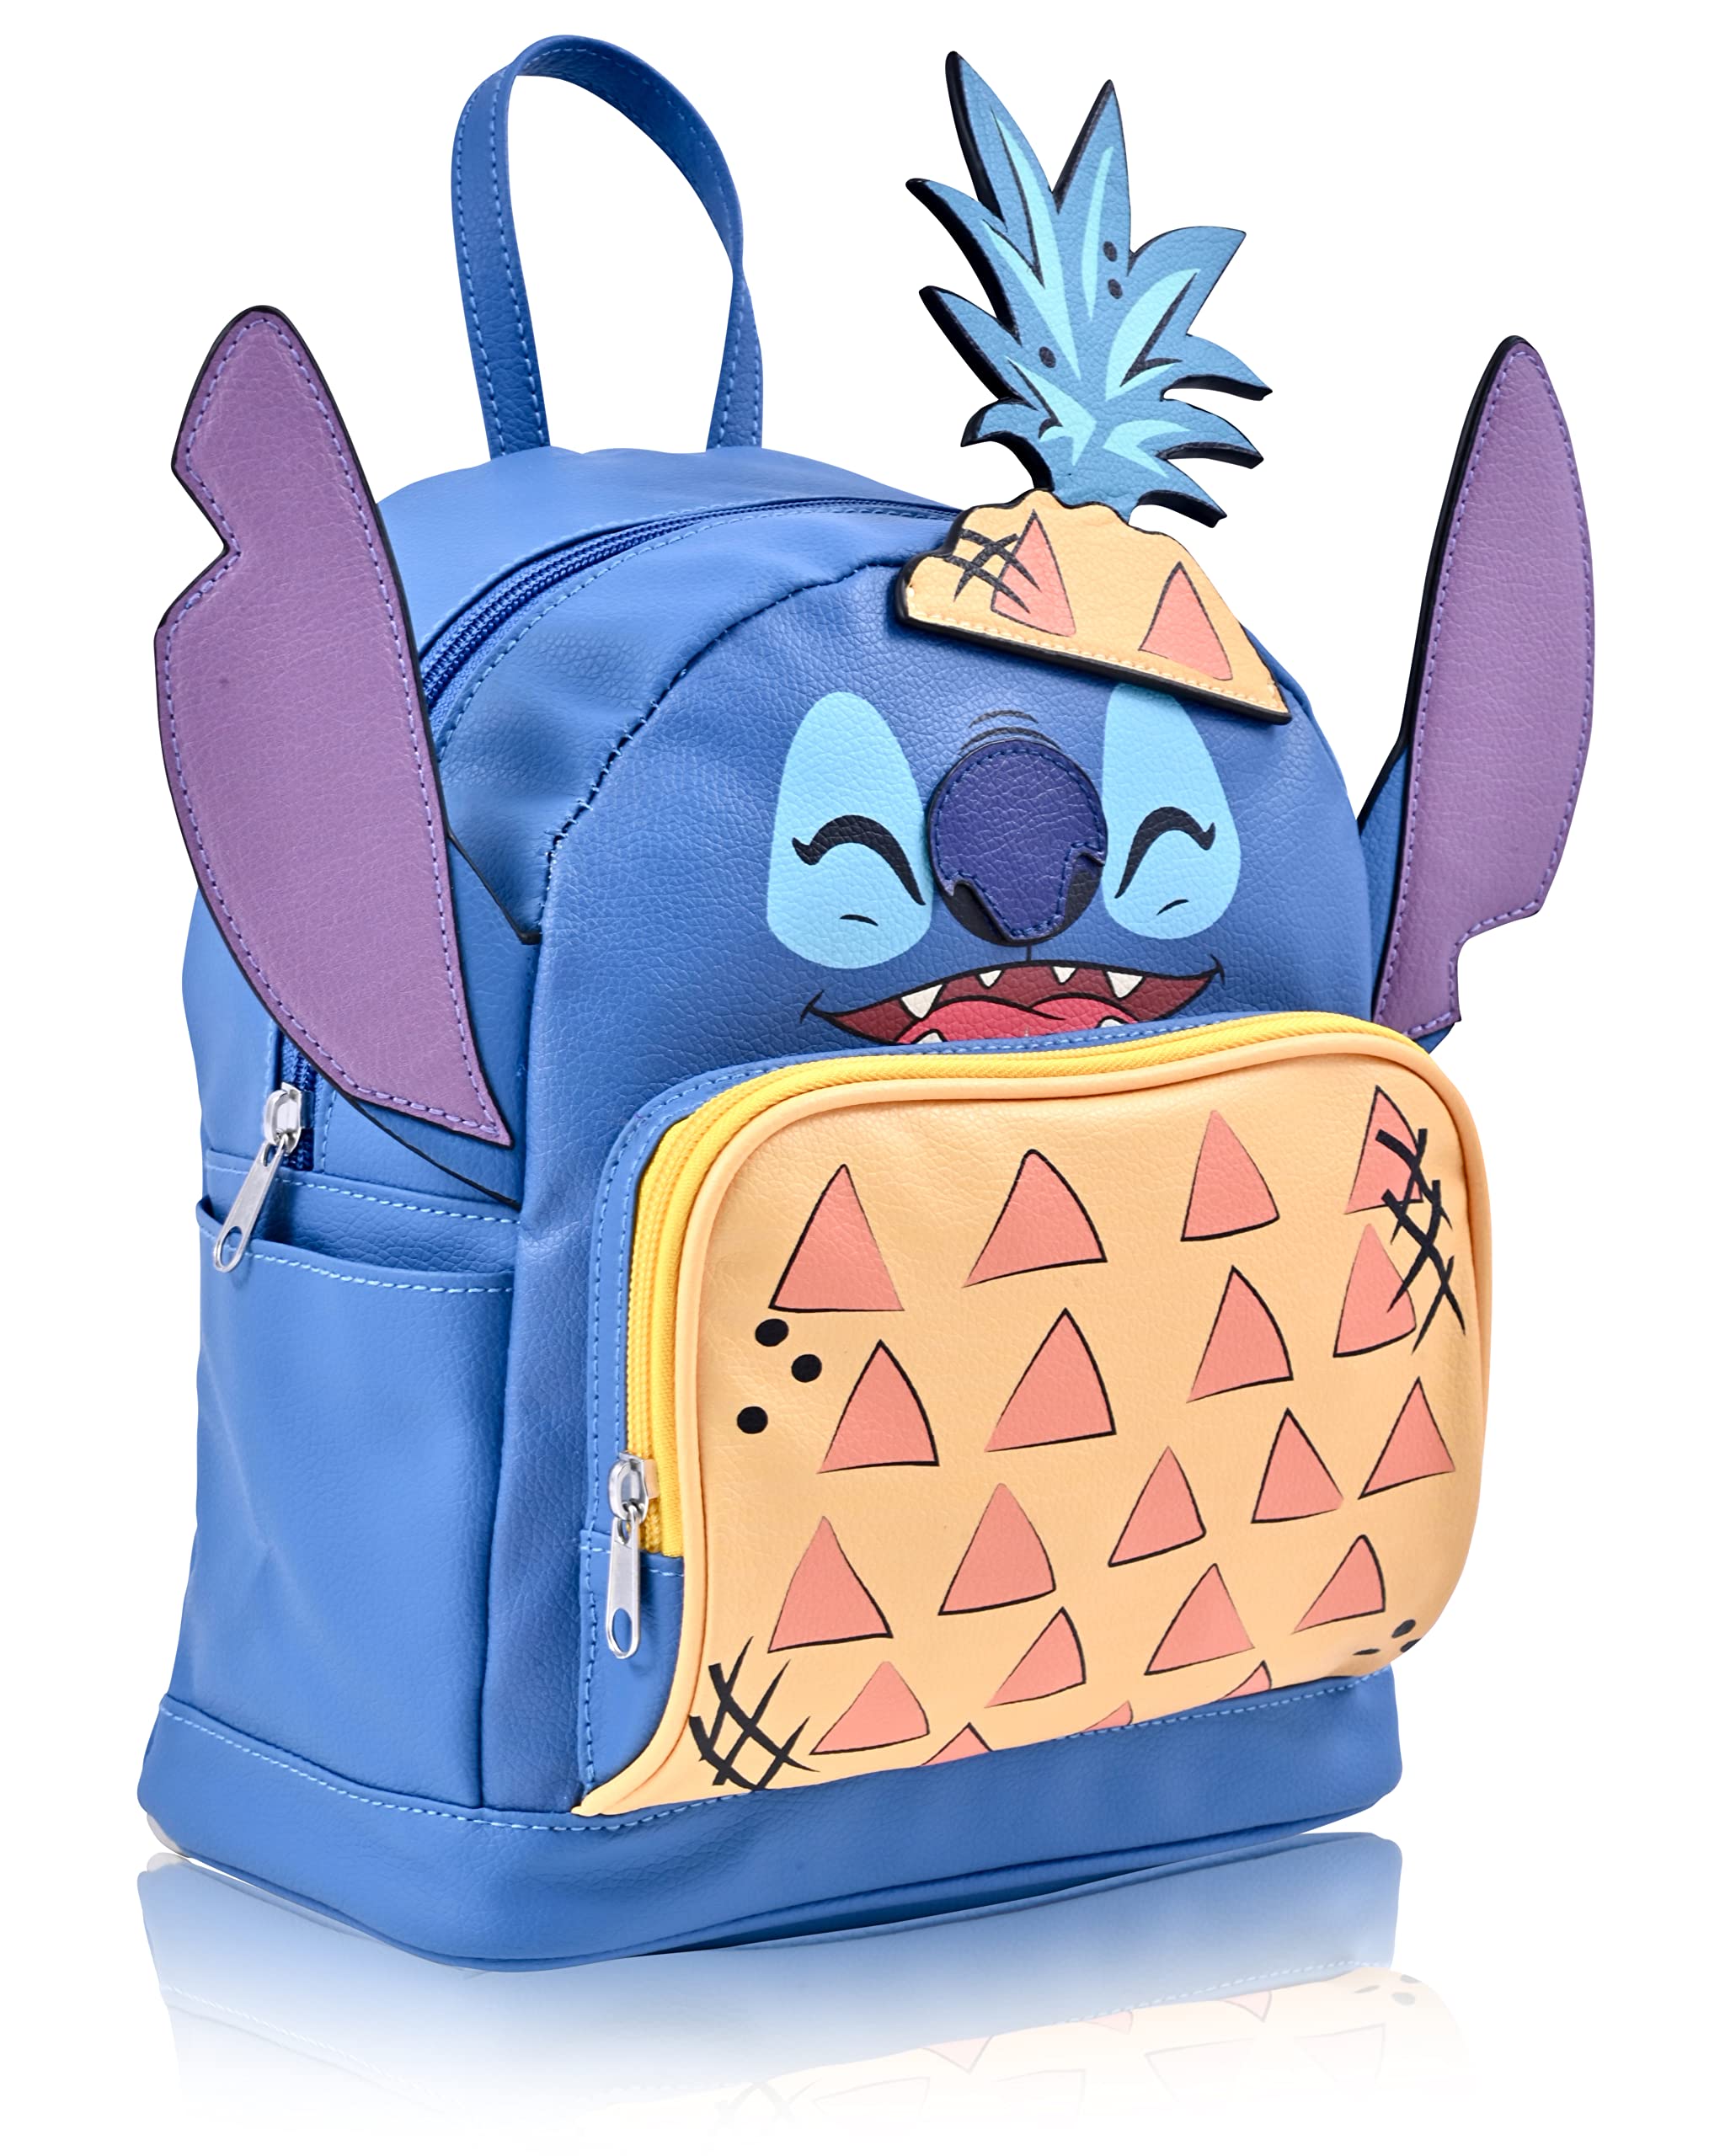 Disney Stitch Backpack - Blue Mini Backpack Purse 10 Inch Bag for Women, Adult Backpack Shoulder Bag Double Strap Faux Leather (Blue Pineapples)